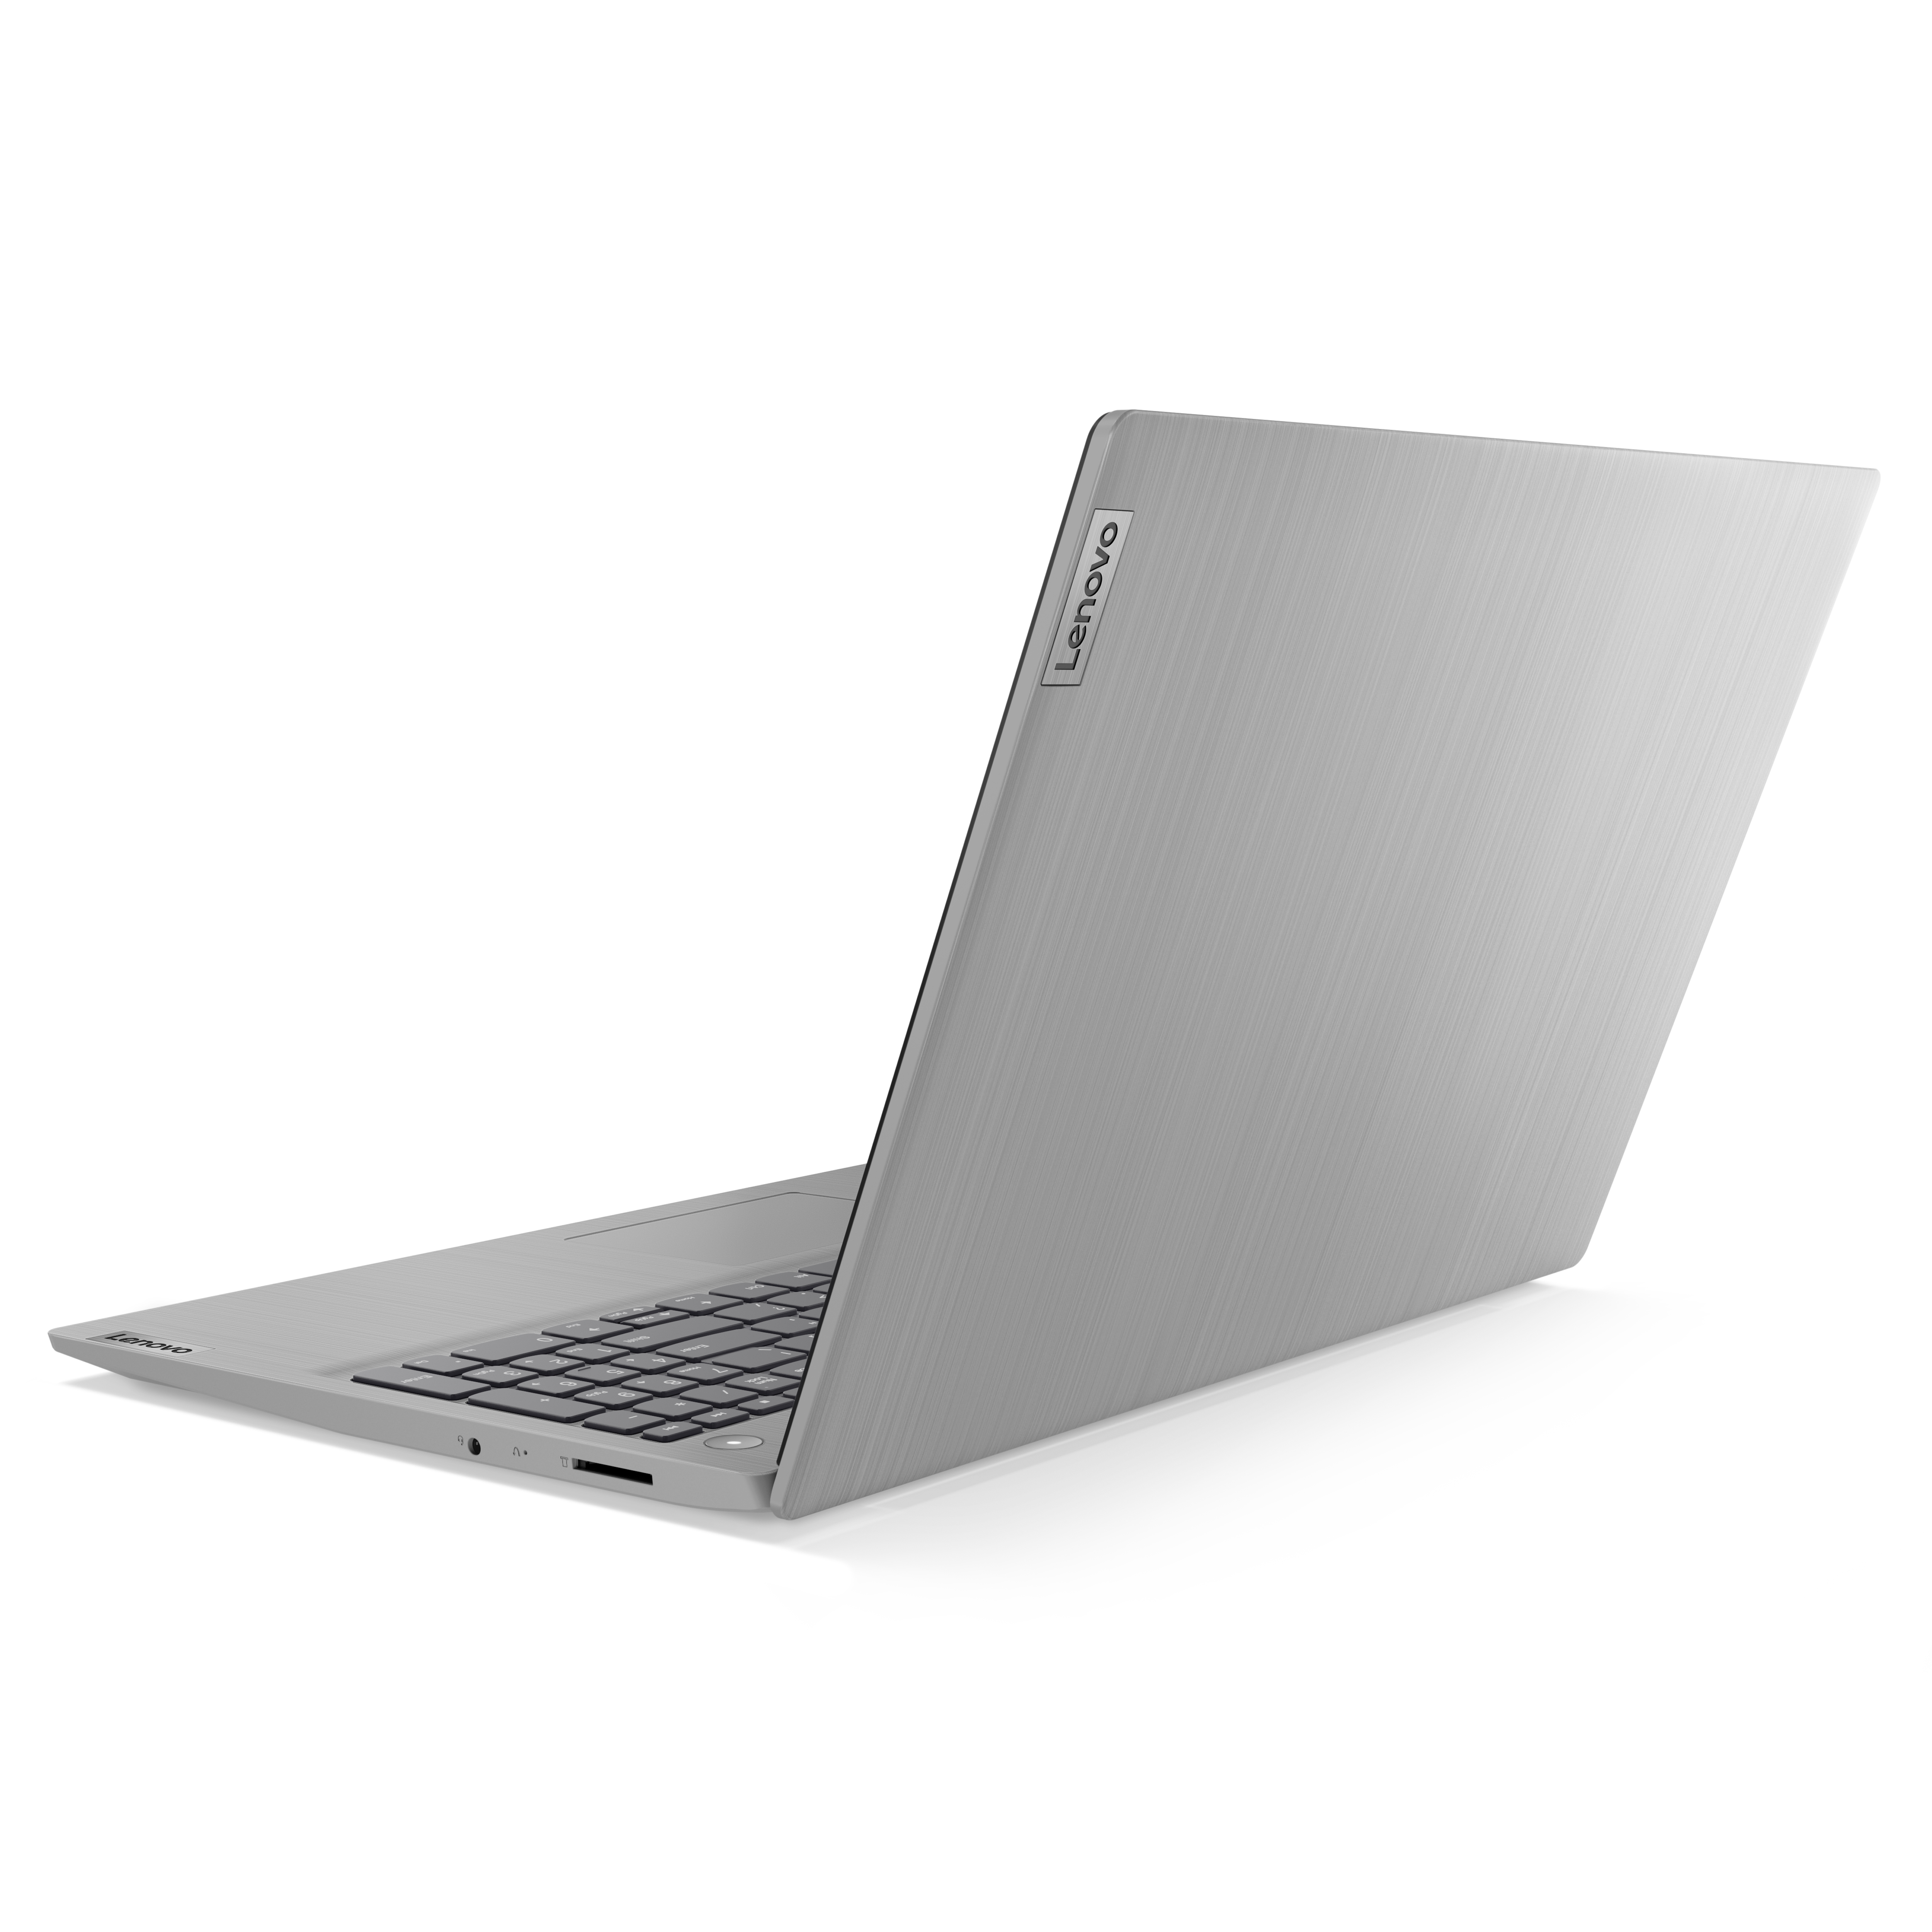 Lenovo Ideapad 3i 15.6" FHD PC Laptop, Intel Core i3-1115G4, 4GB, 128GB SSD, Platinum Grey, Windows 10 in S Mode, 81X8007EUS - image 5 of 14